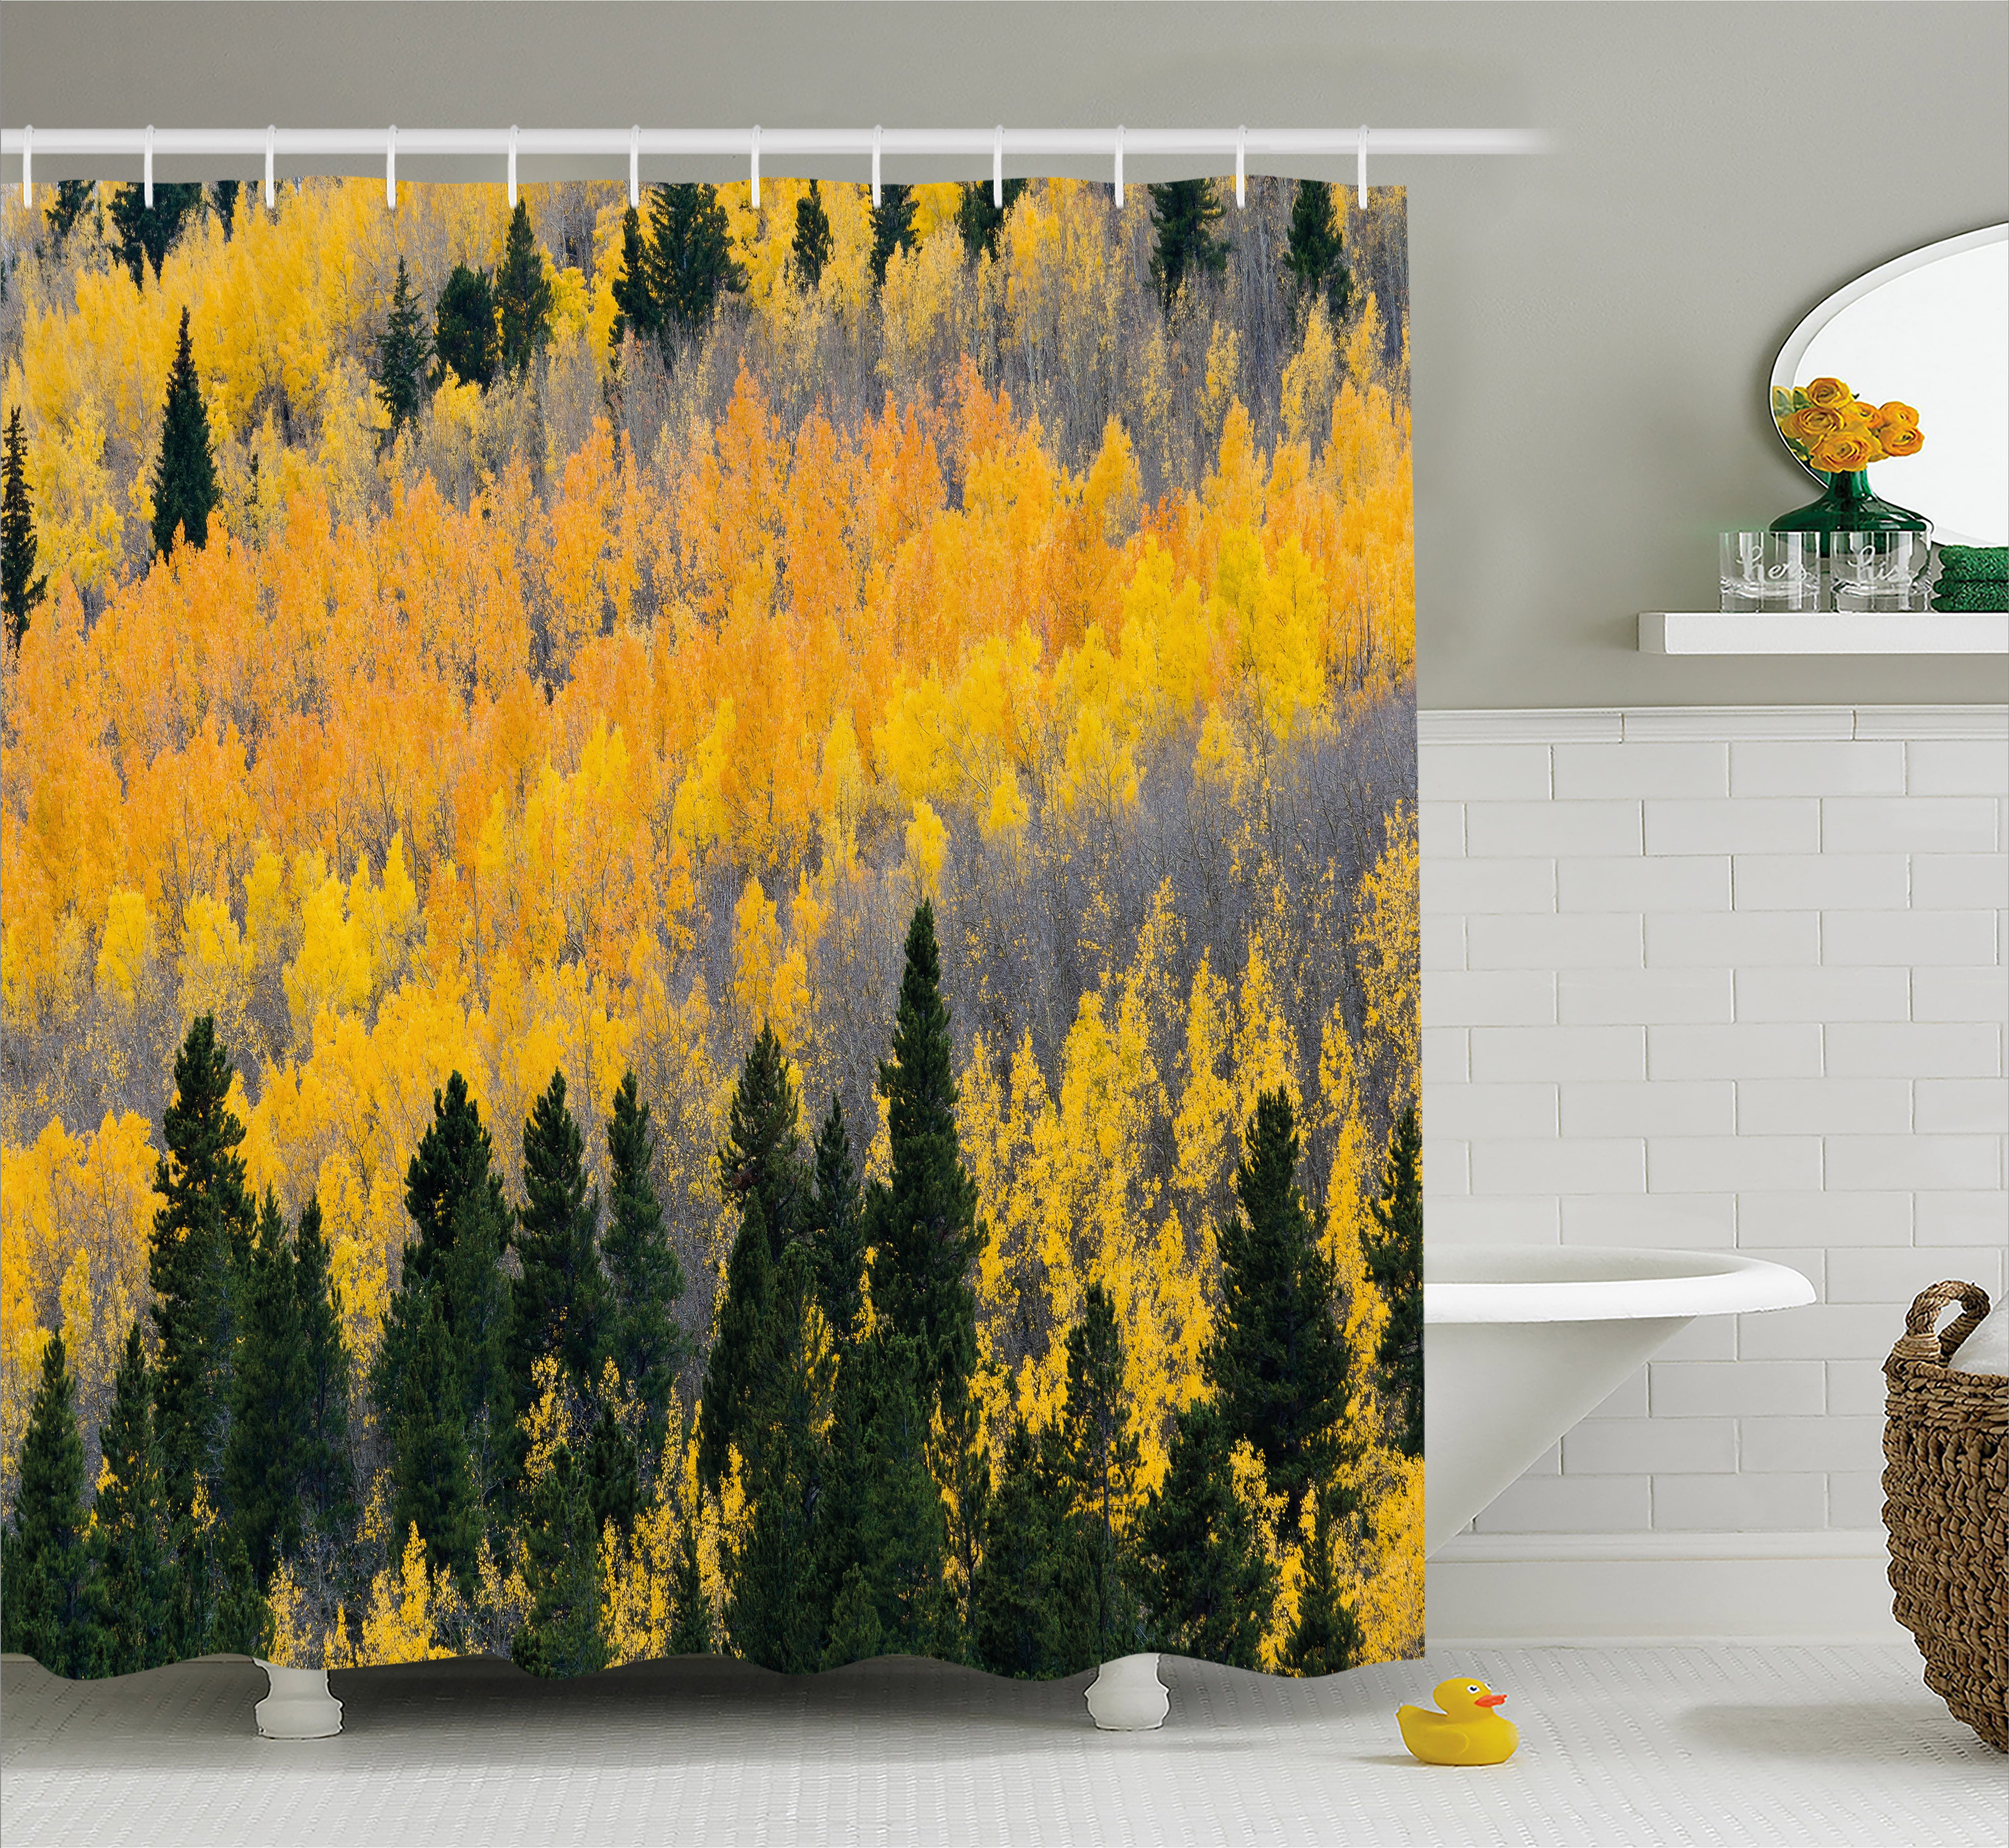 30 Top Photos Wilderness Bathroom Decor / Lodge Rustic Shower Curtain - Foter